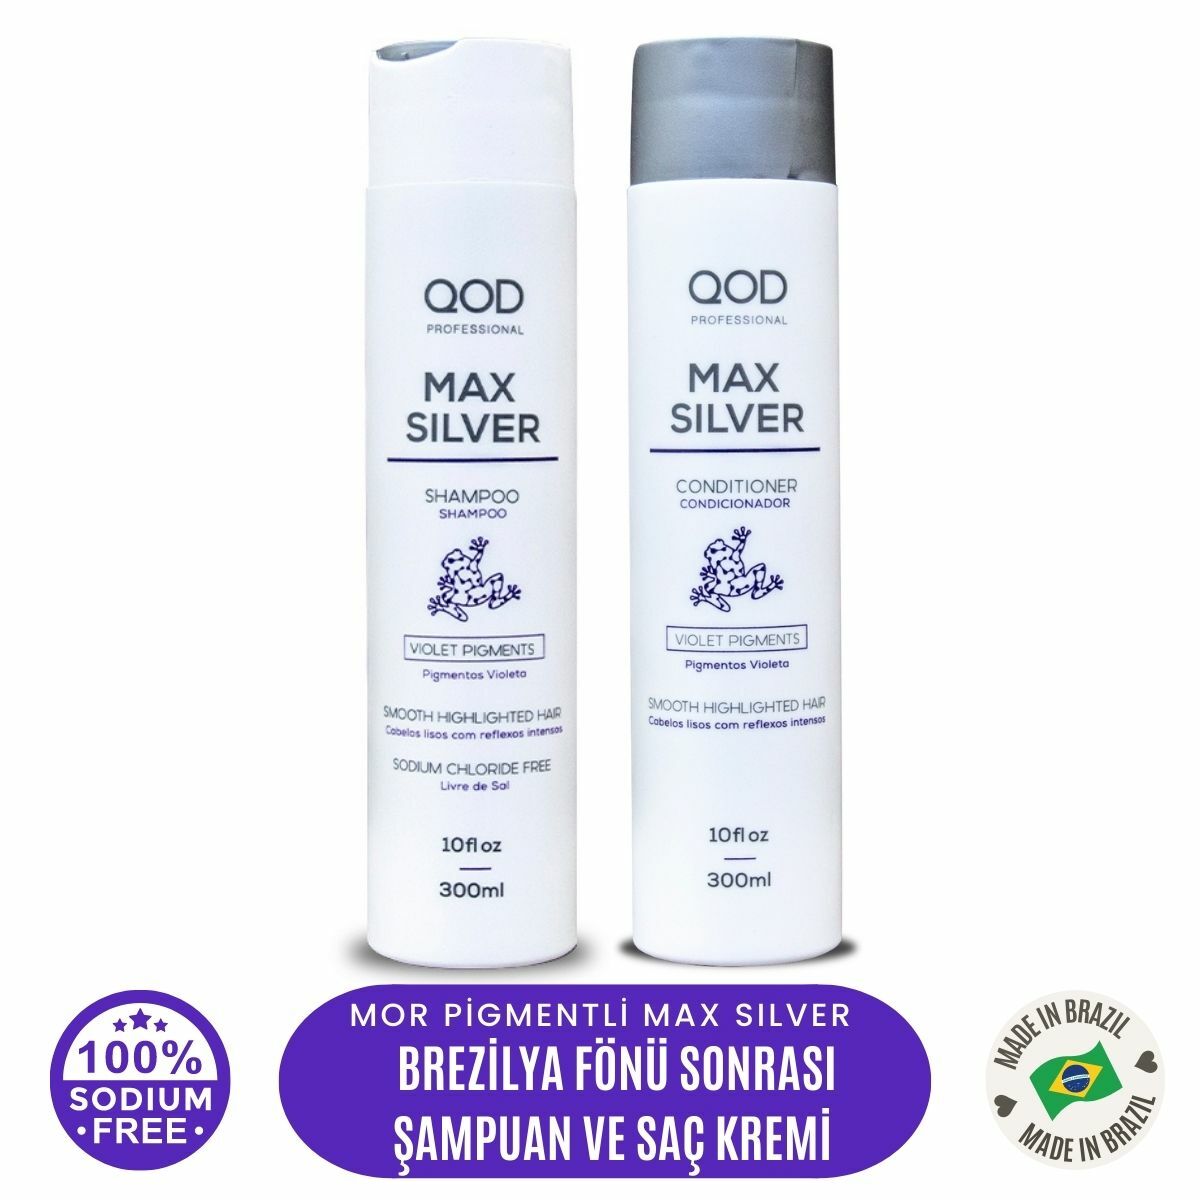 Mor Silver Şampuan 300 mL + Mor Silver Saç Kremi 300mL QOD Profesyonel Max Silver  Şampuan & Saç Kremi - Mor Pigmentli